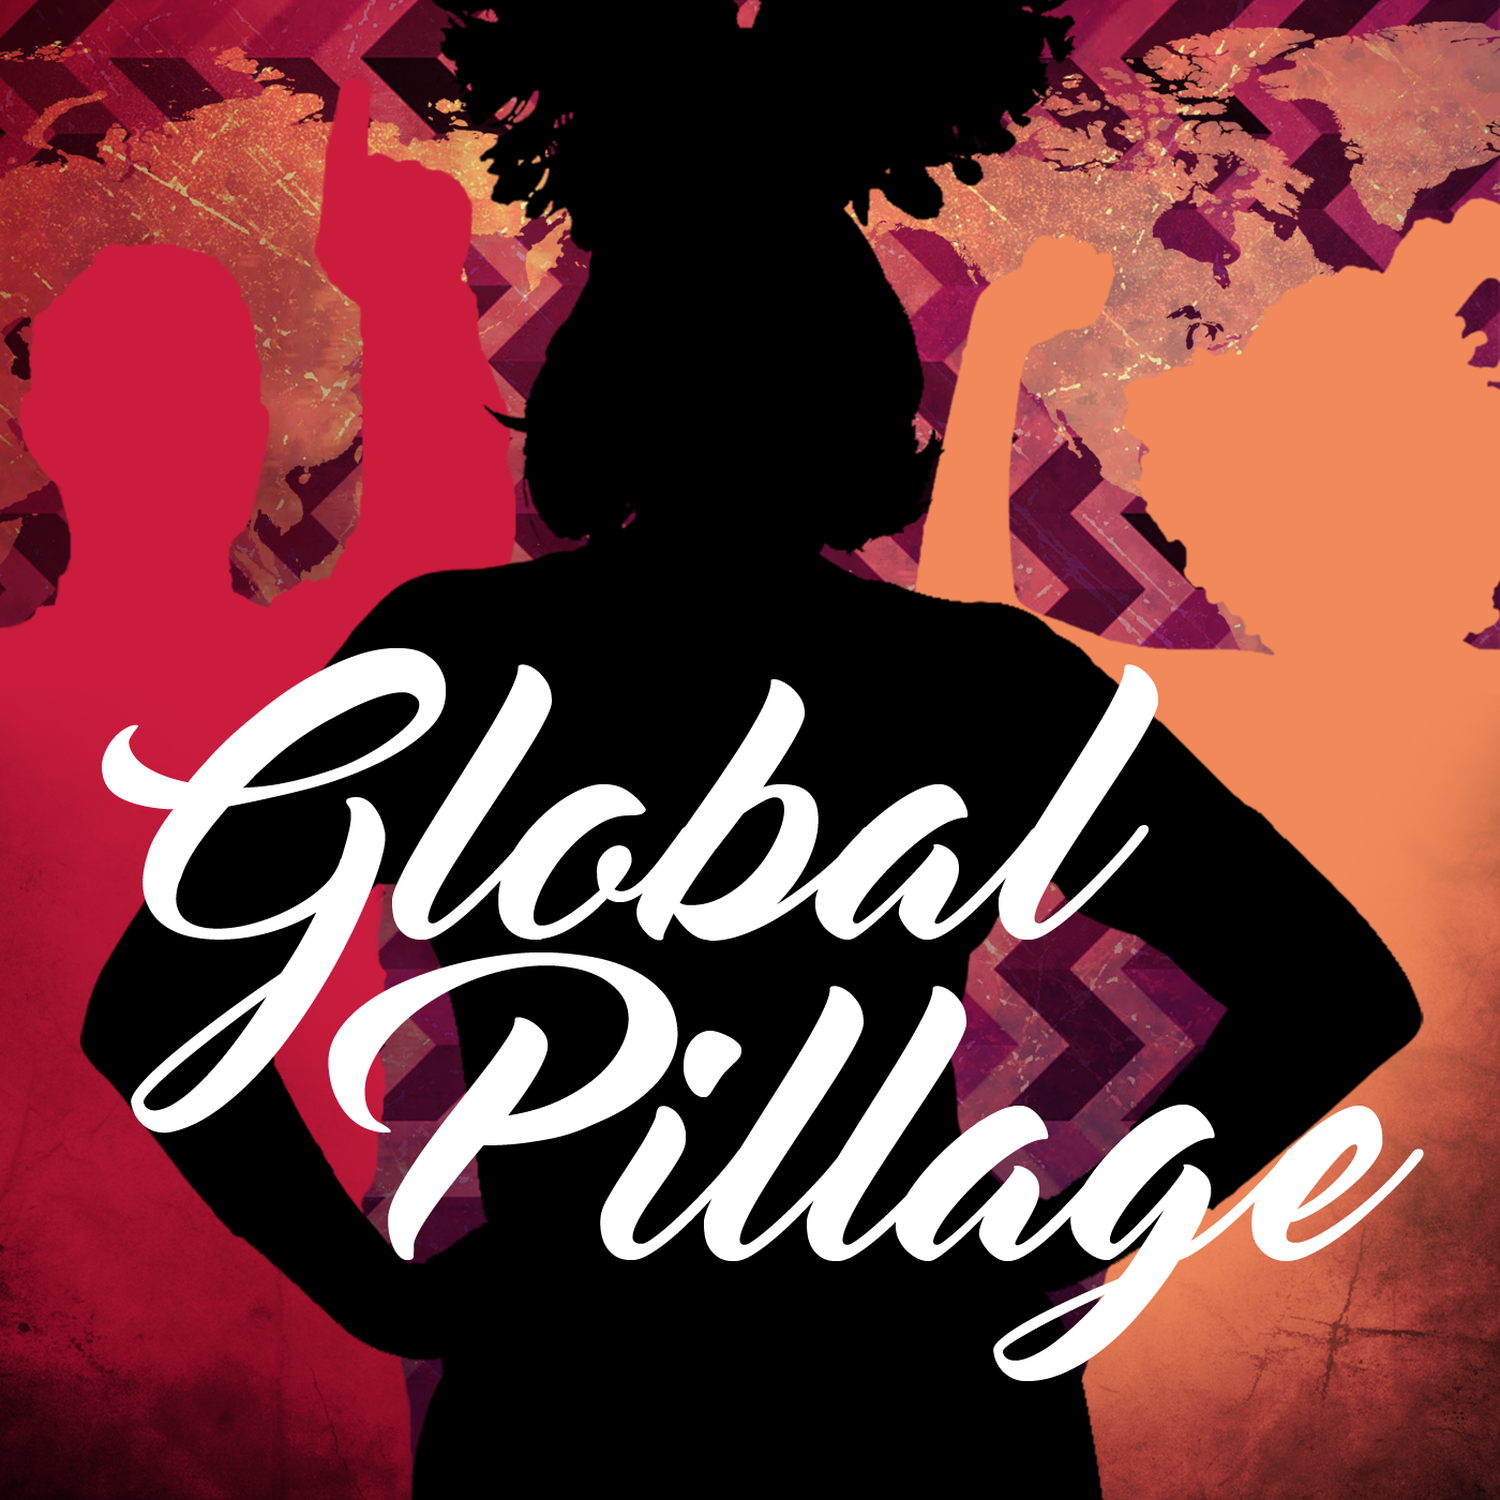 Global Pillage